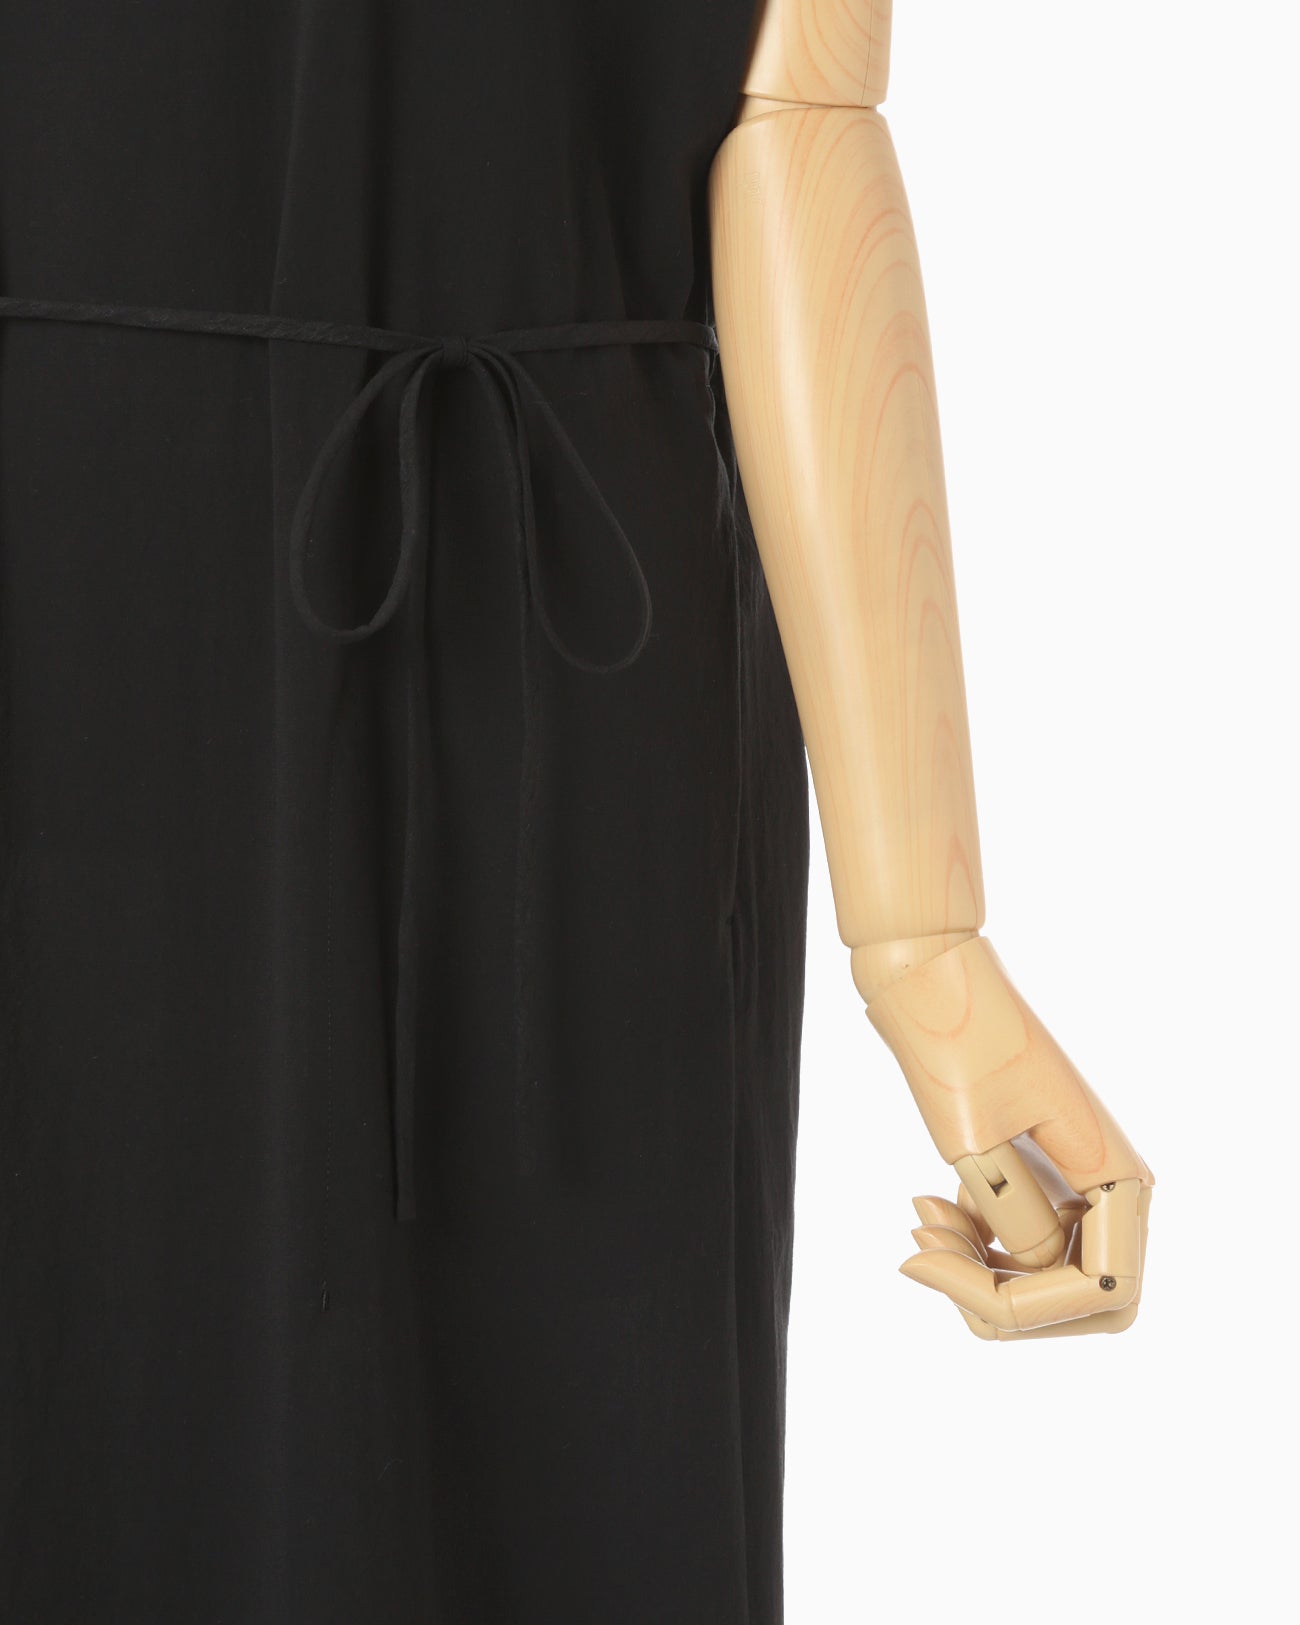 Crepe Cotton Sleeveless Dress - black